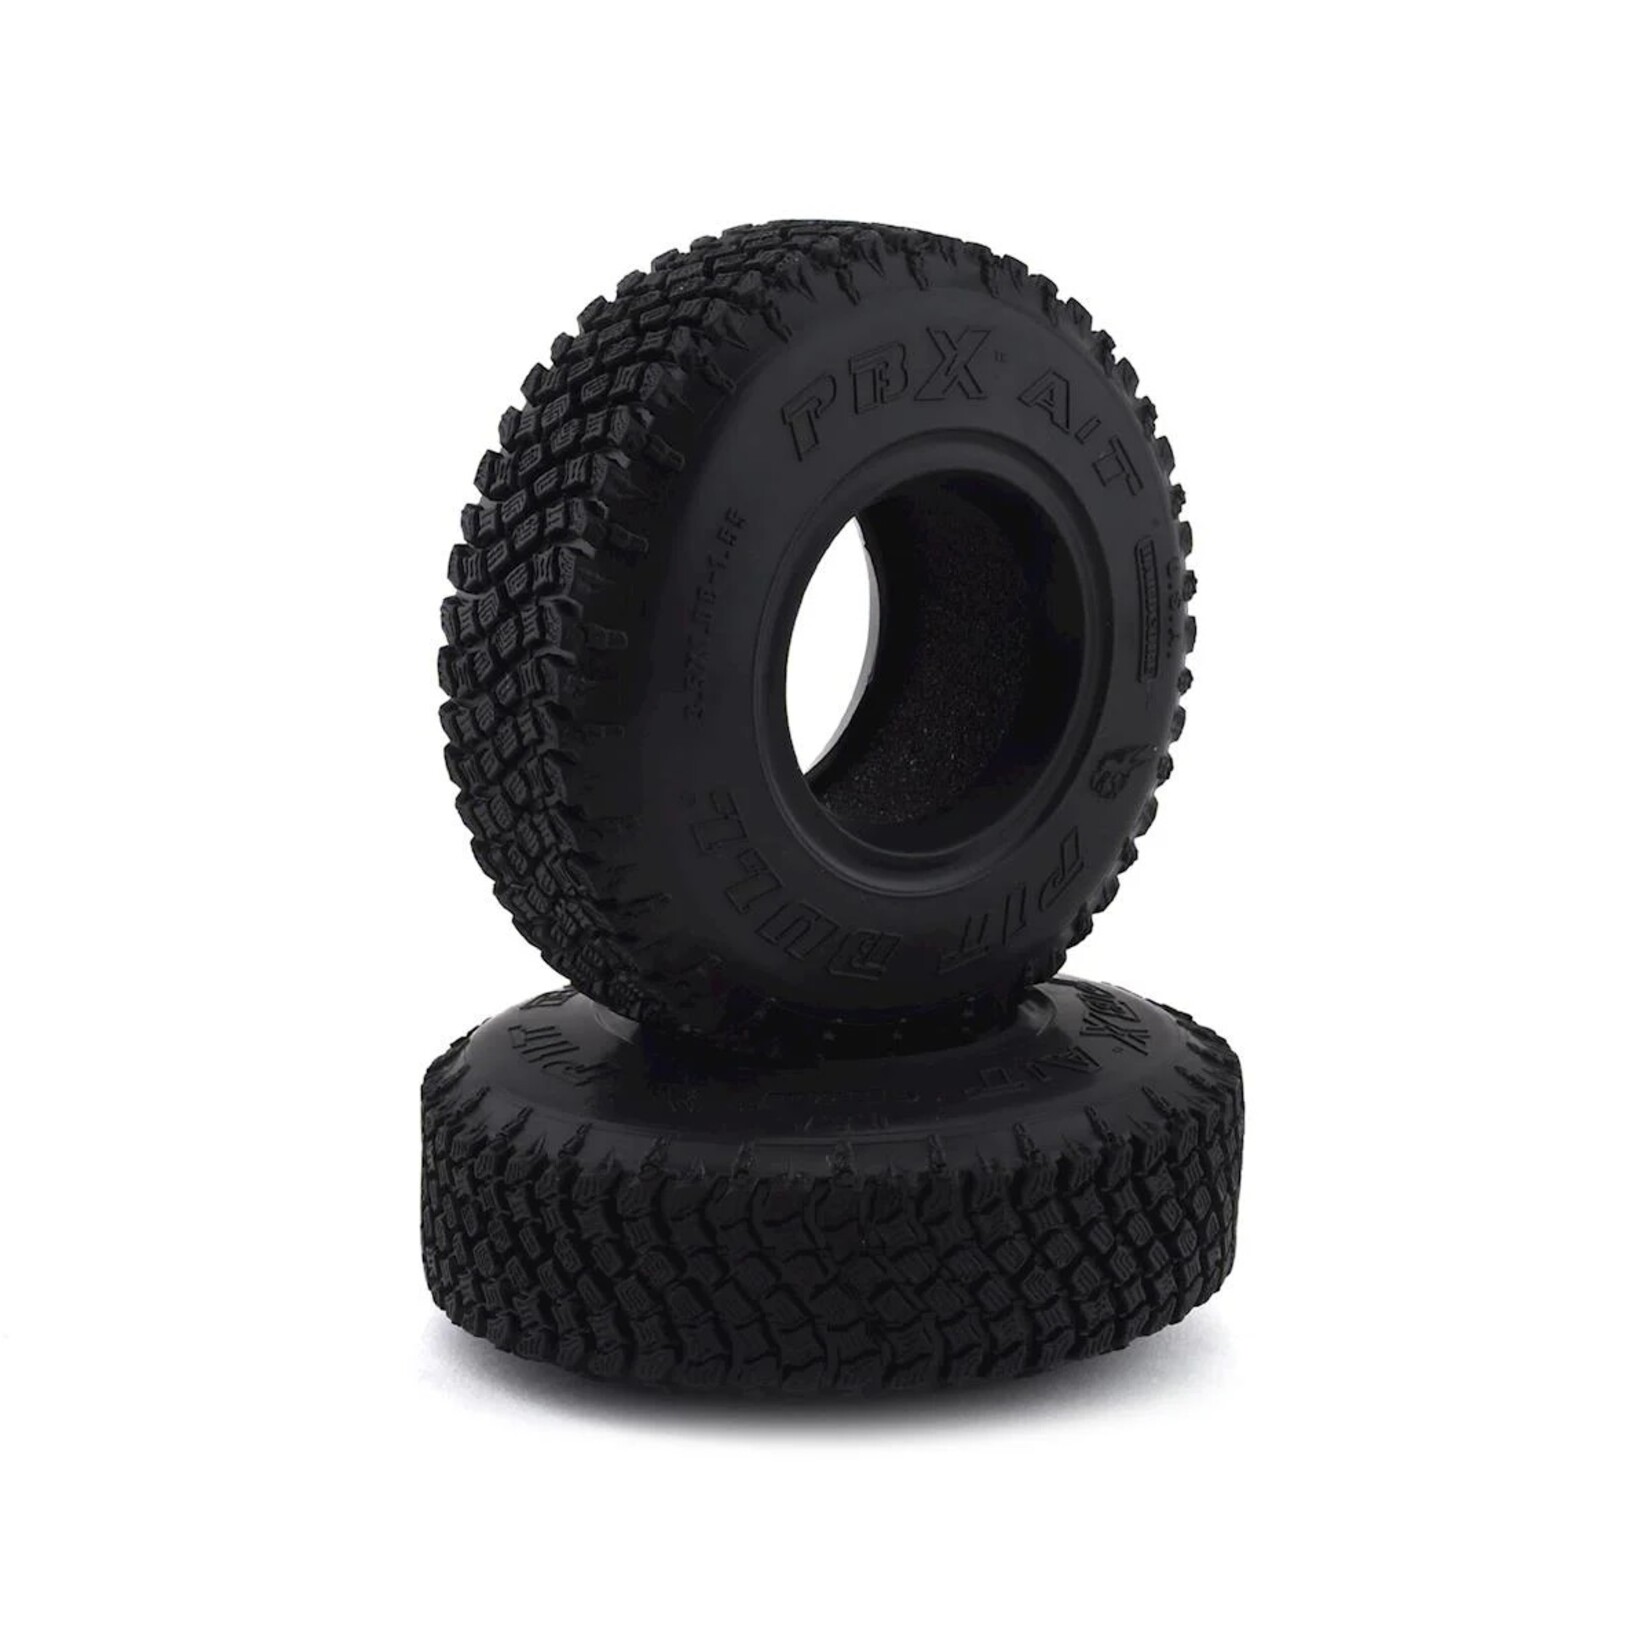 Pit Bull Pit Bull Tires PBX A/T 1.55 Scale Rock Crawler Tires w/Foams (2) (Alien) #PB9019AK